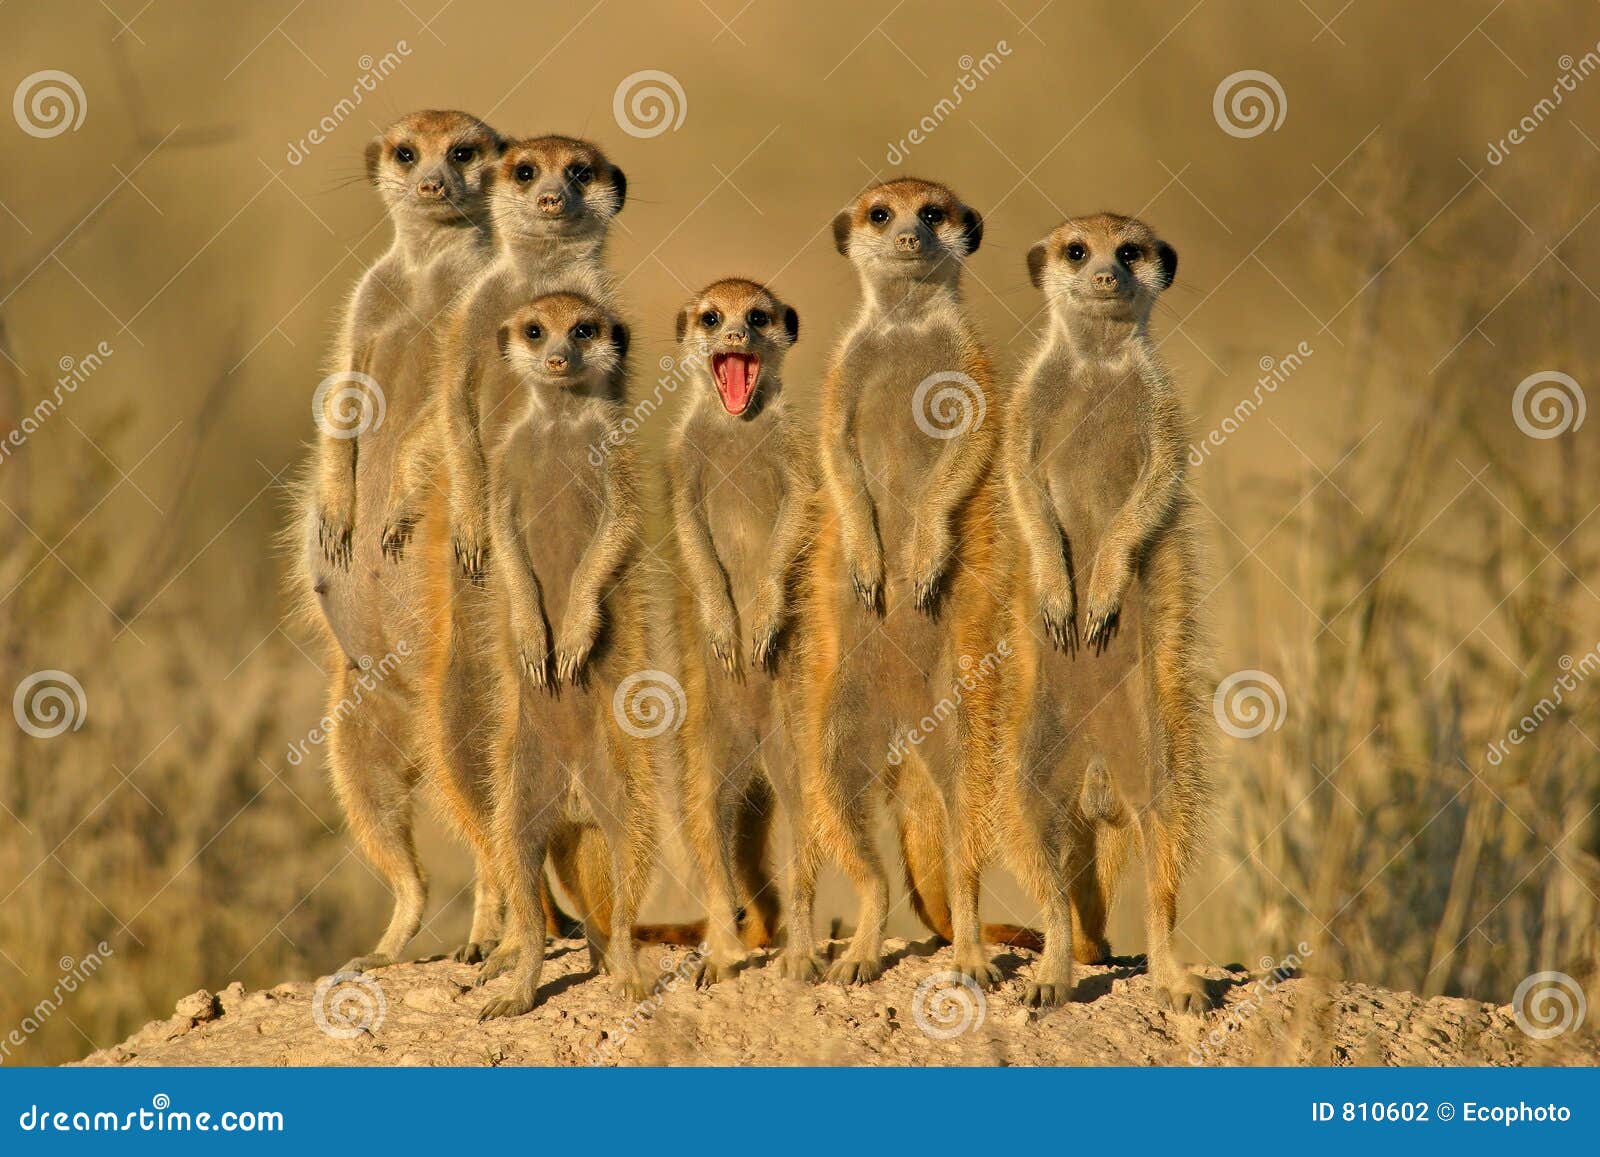 meerkat (suricate) family, kalahari, south africa